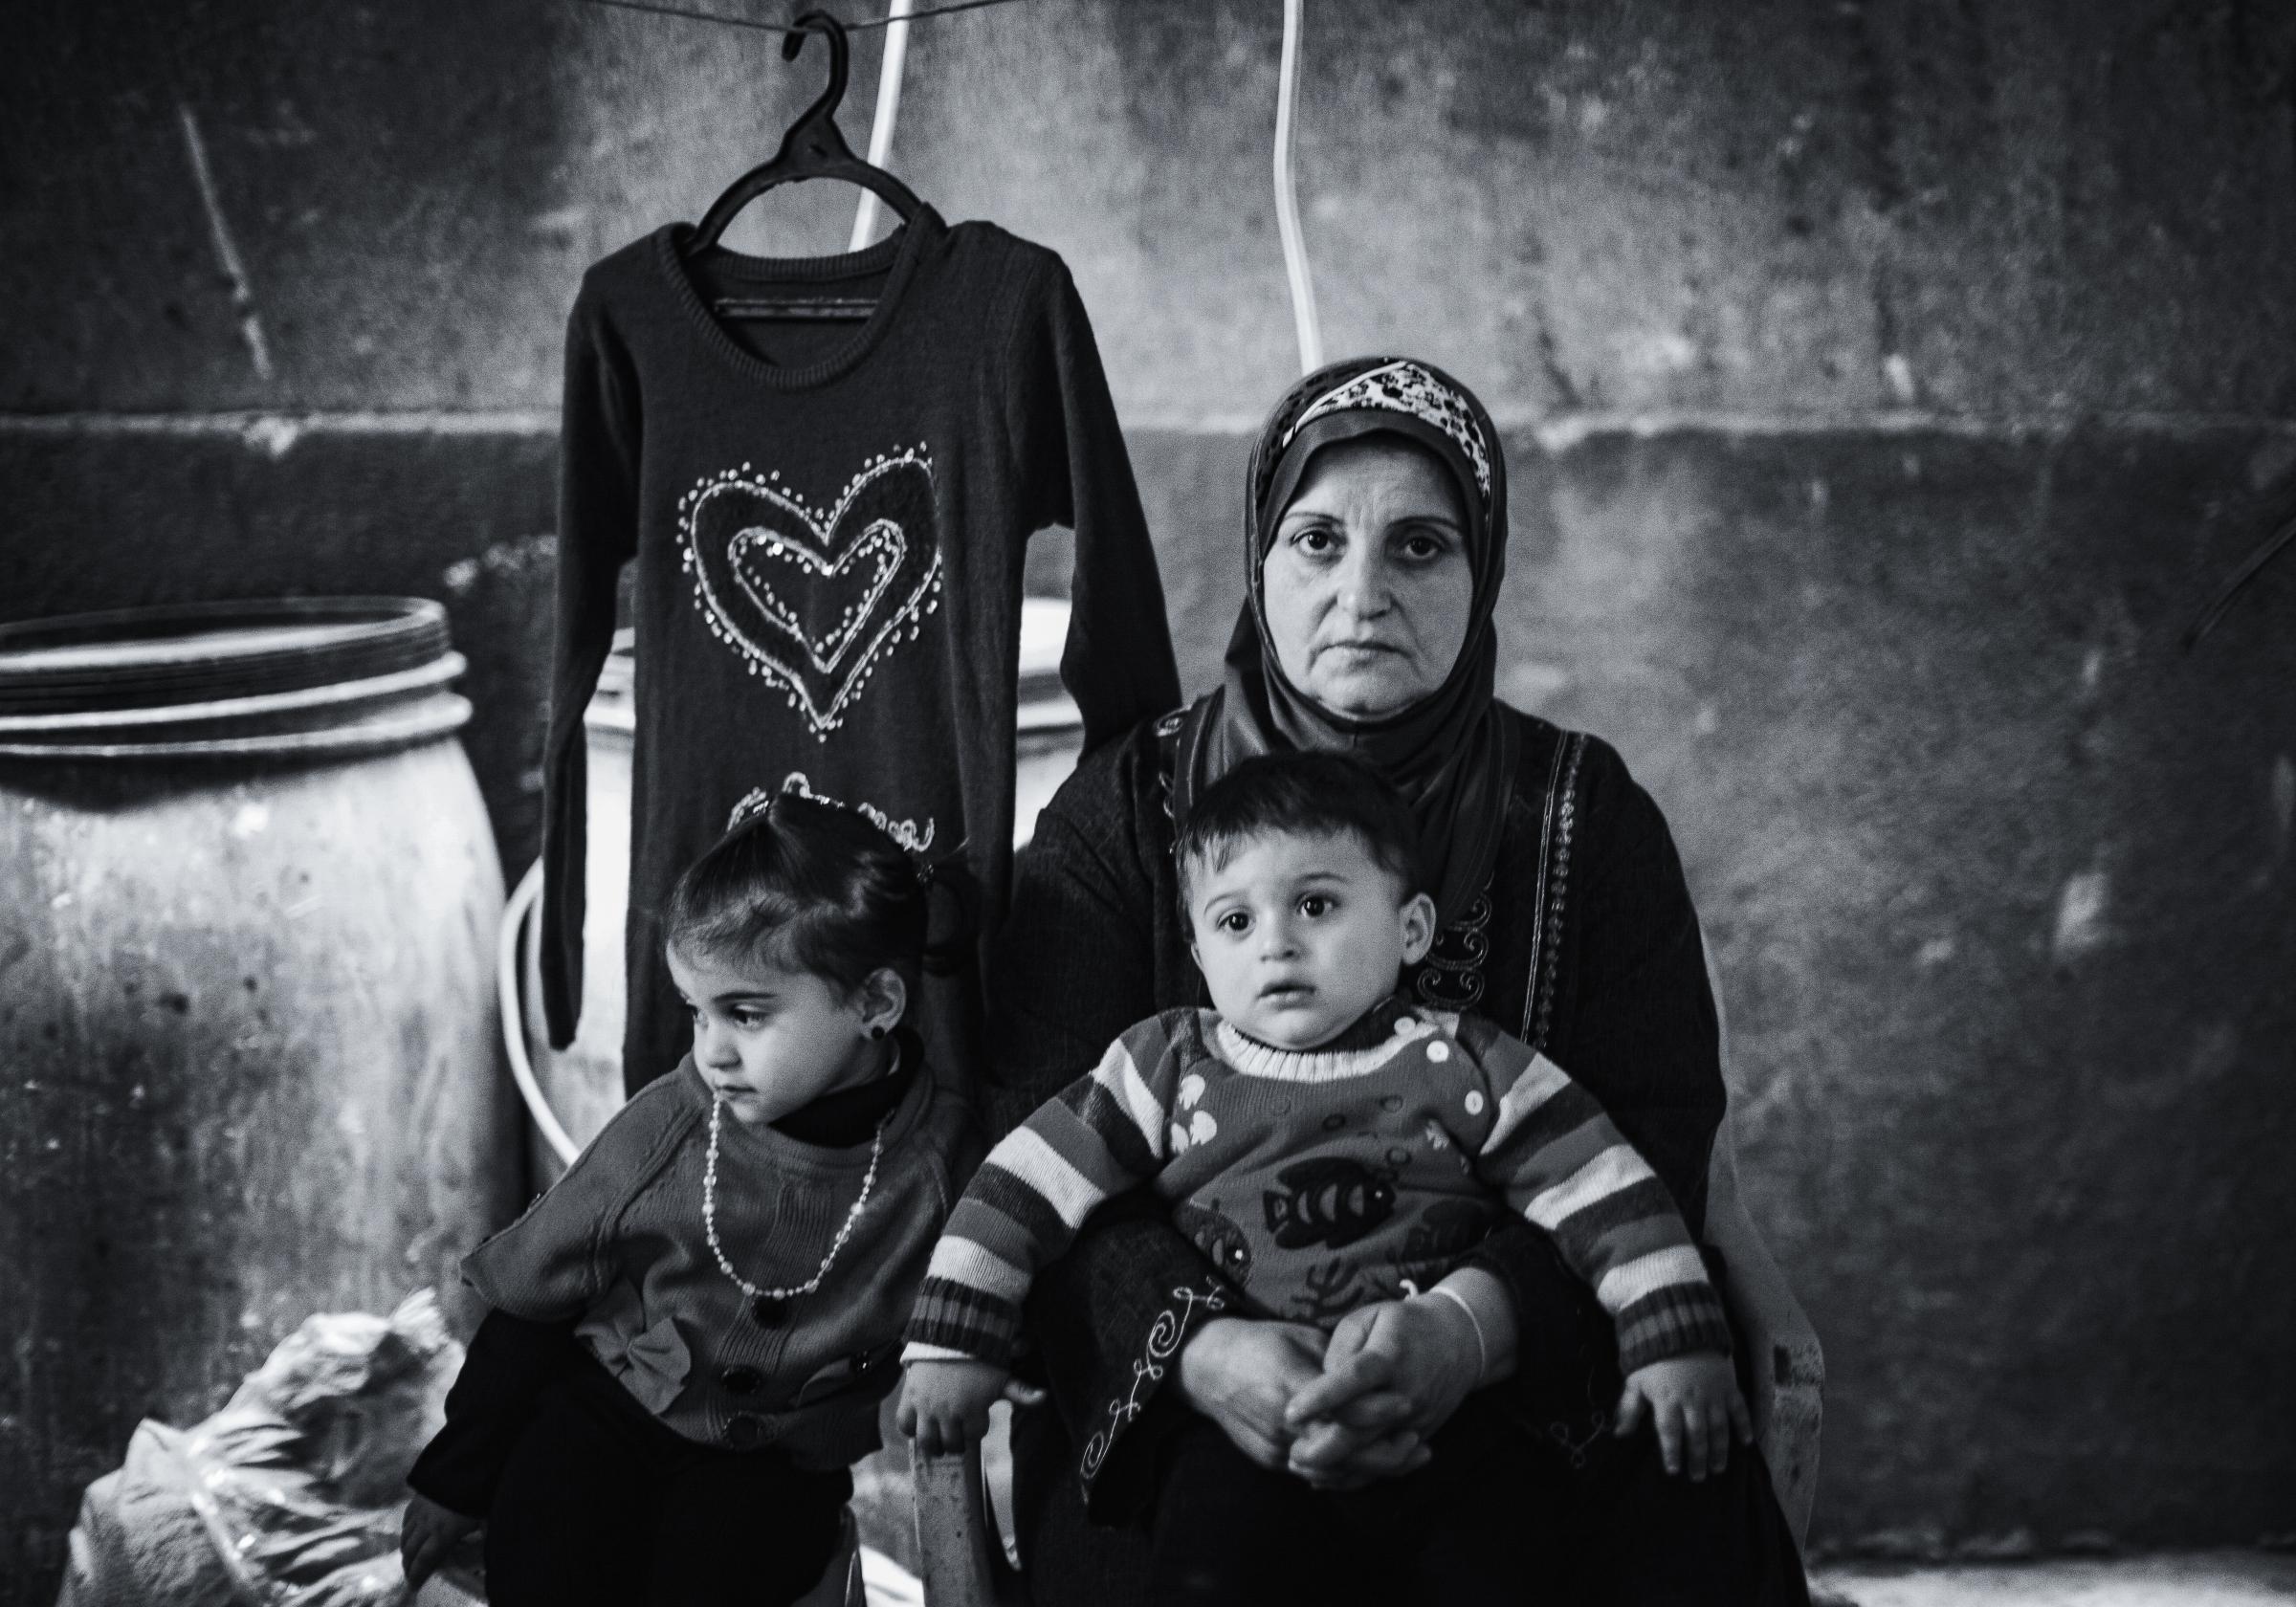 Broken souvenirs -  Um Haitham Abo Zour, Gaza War 2011:  "I saw blood...